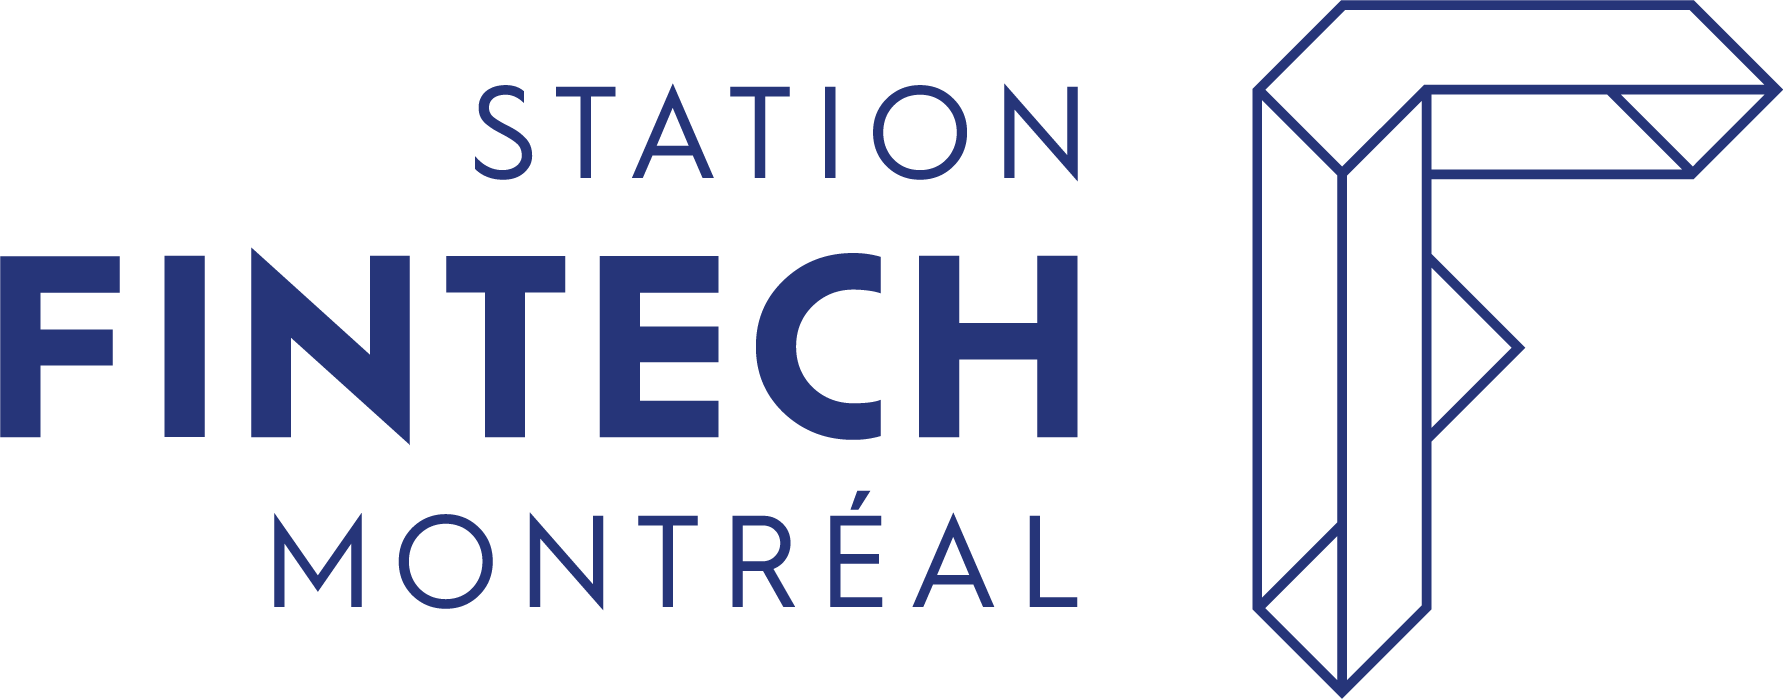 Station_Fintech_logo.png